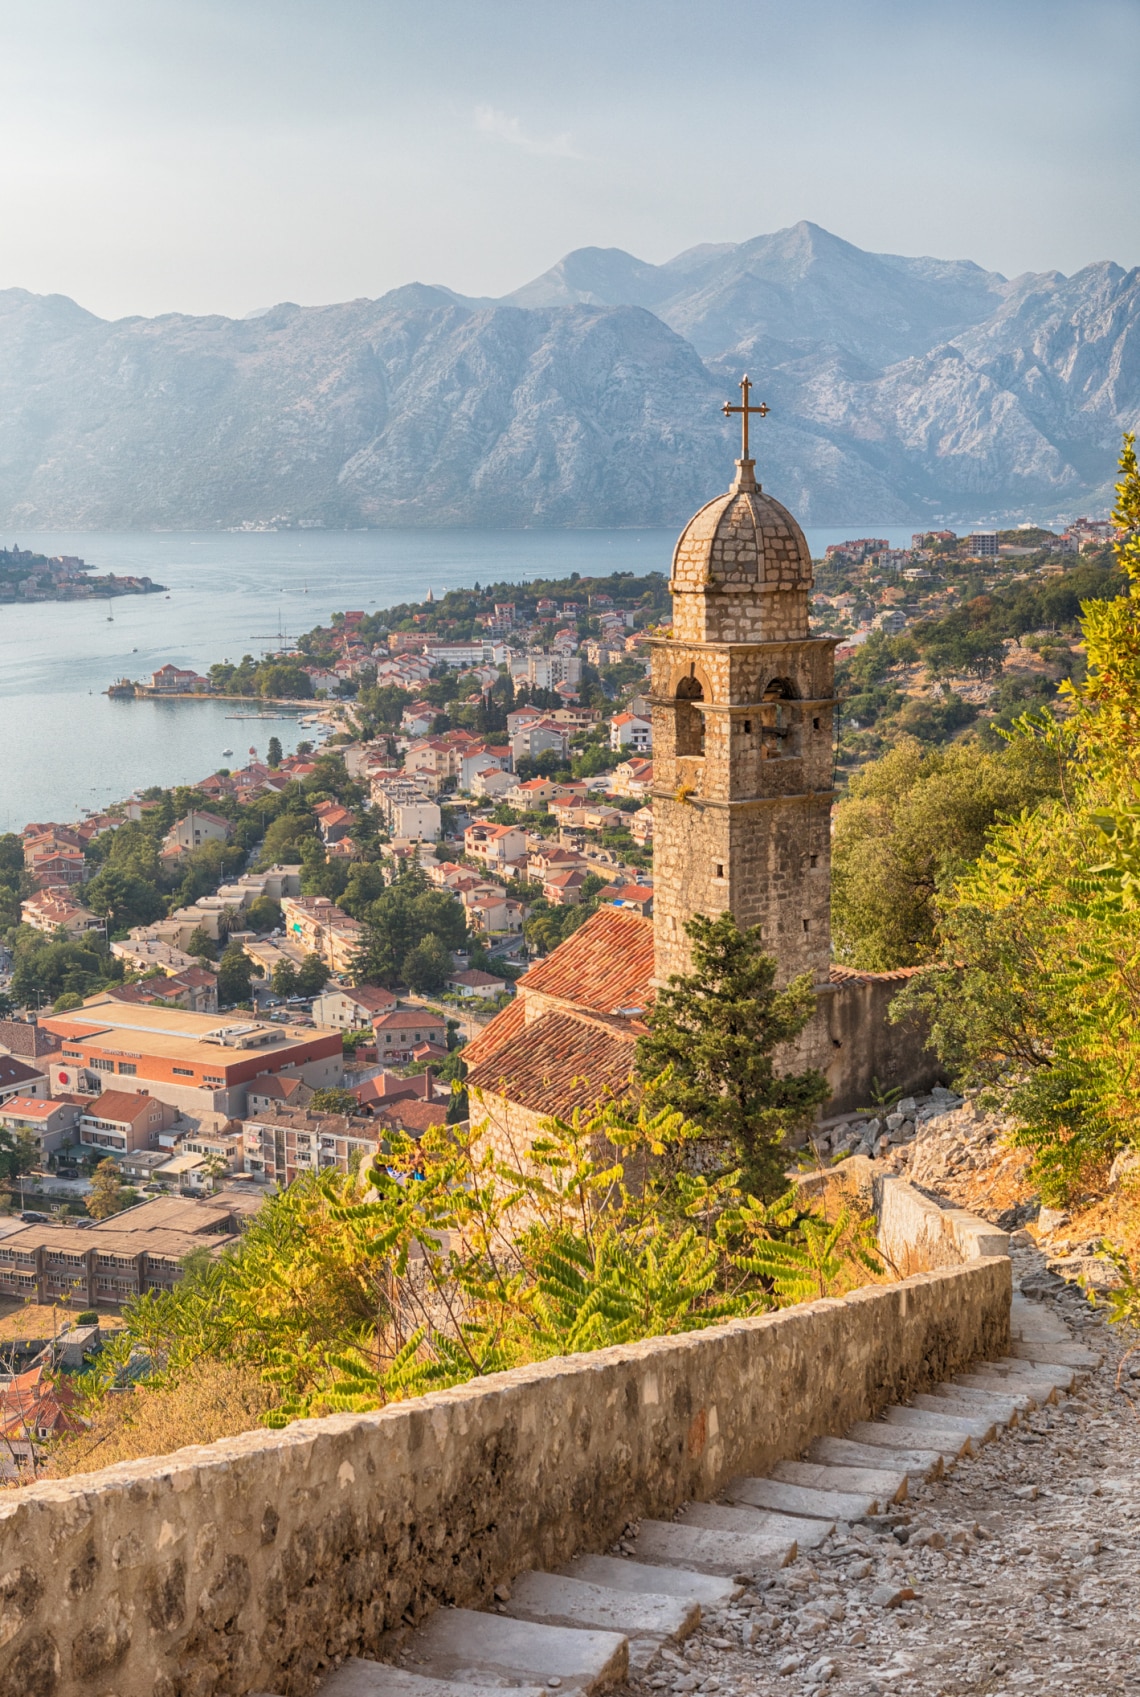 De mit érdemes megnézni Montenegróban?